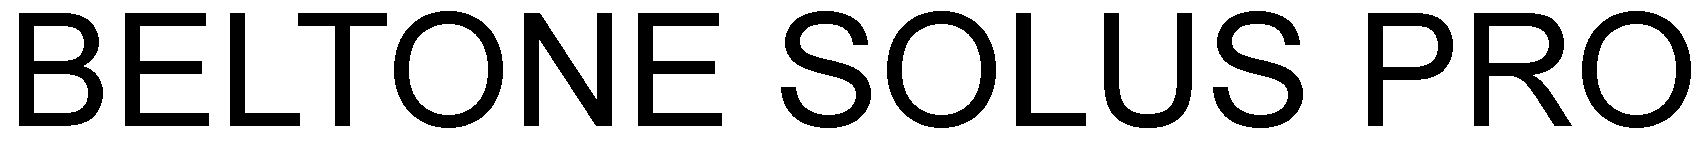 Trademark Logo BELTONE SOLUS PRO